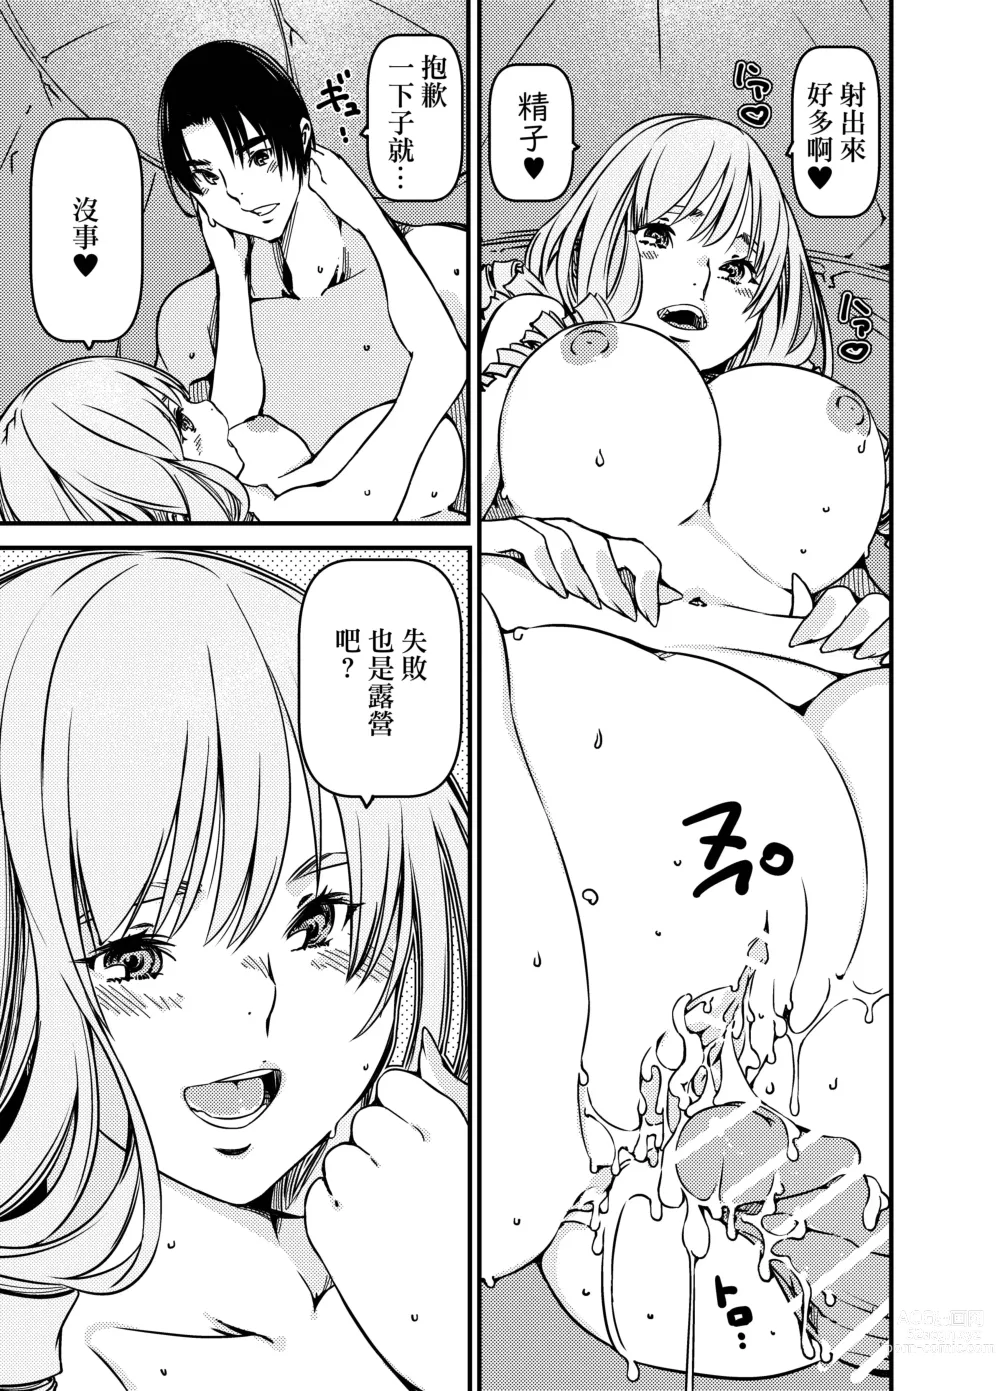 Page 30 of doujinshi 明明是個露營獨行俠卻被陽光辣妹貼上來了